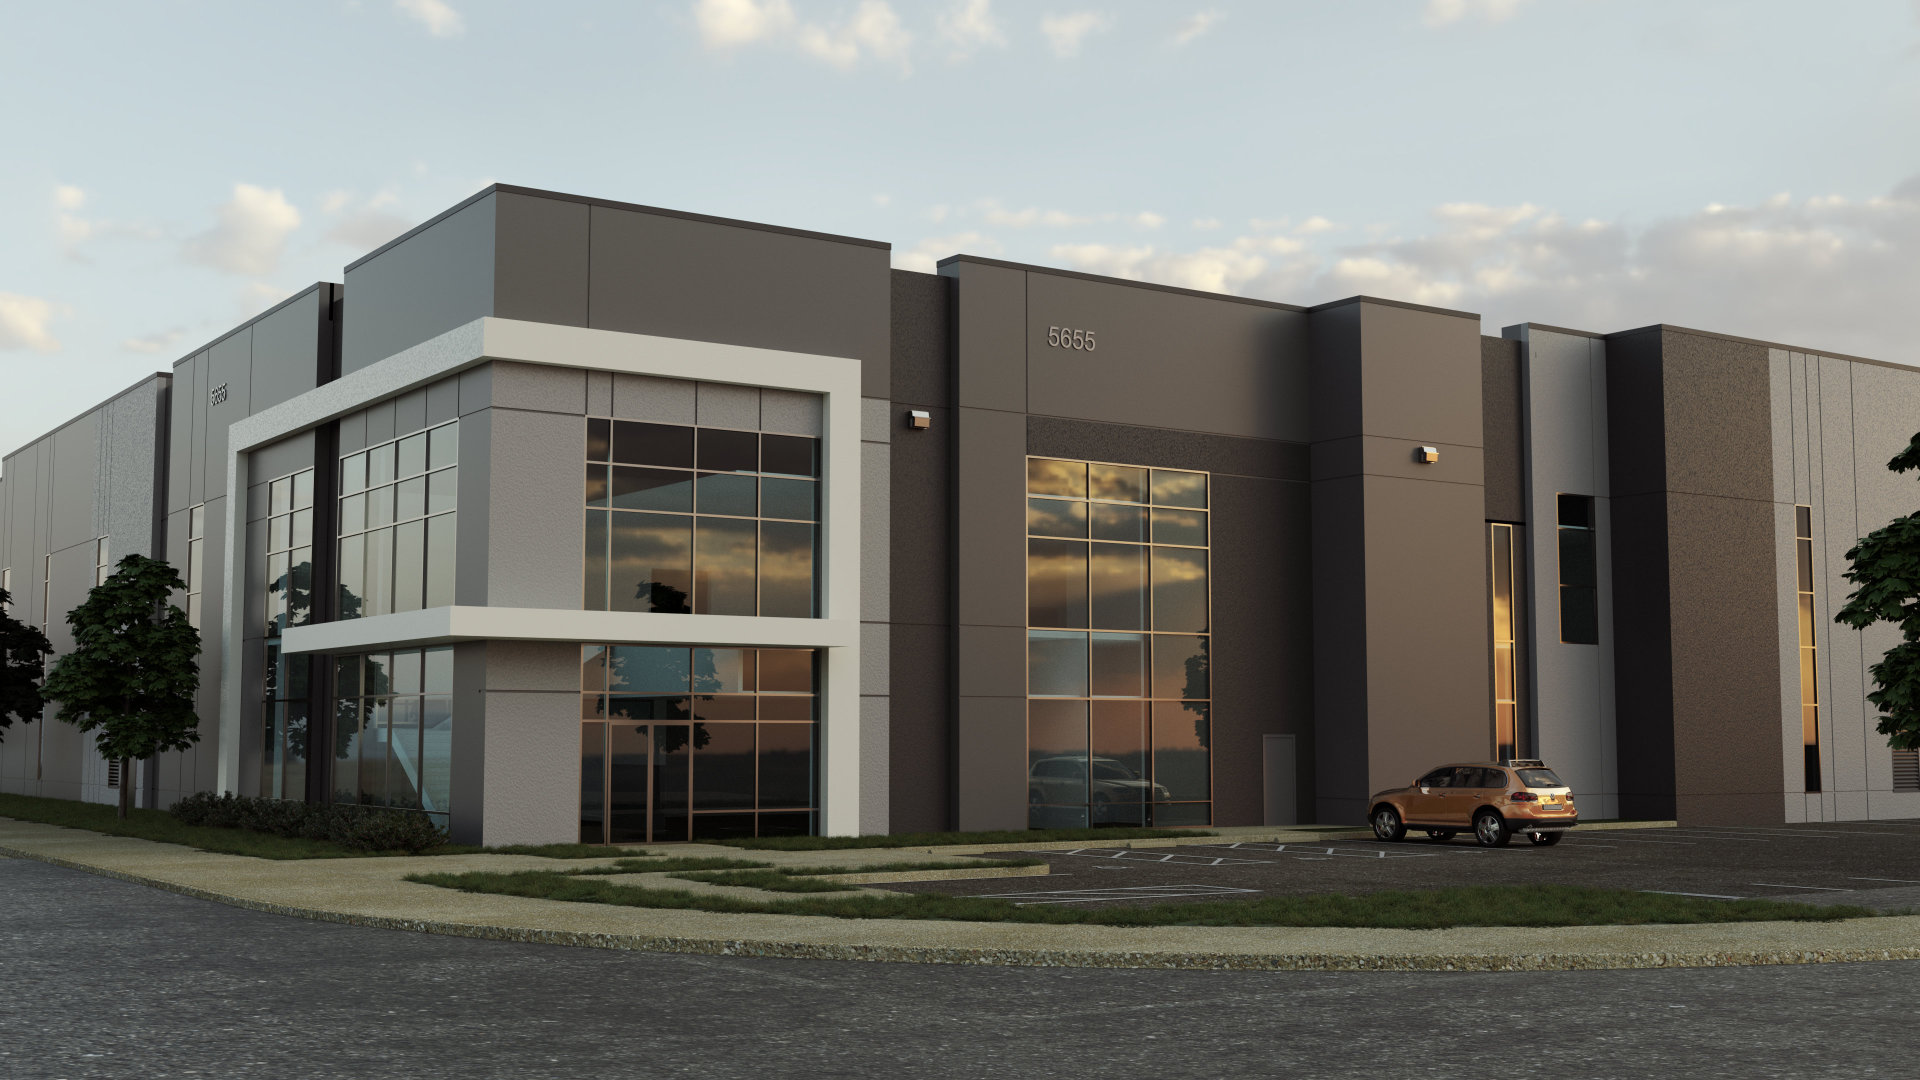 3d model rendering of warehouse front